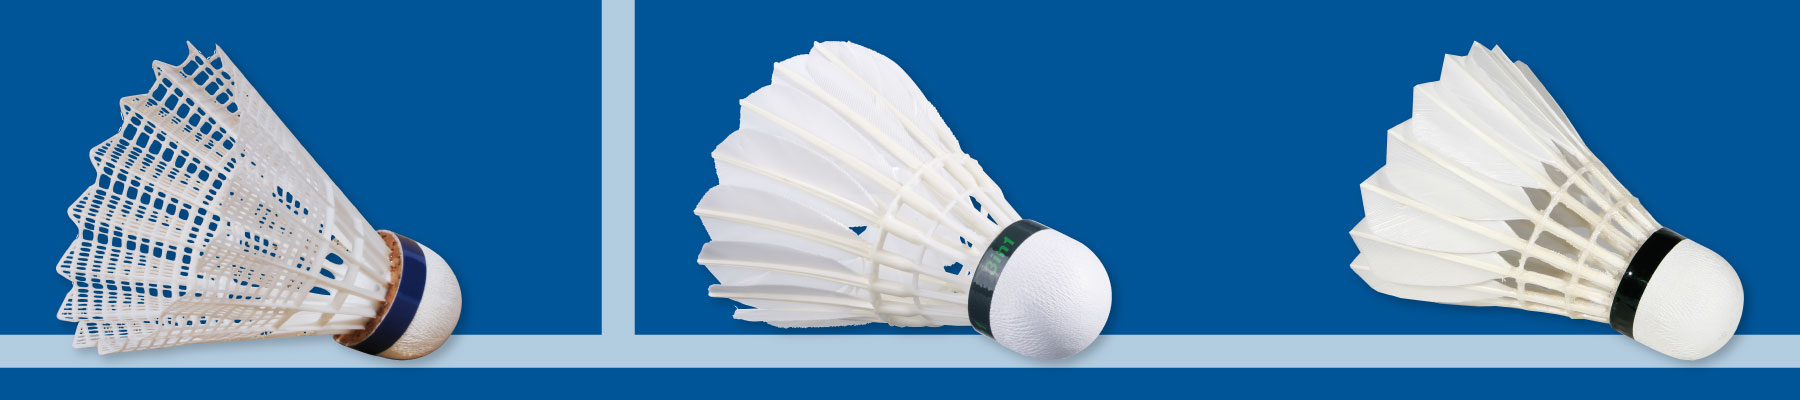 Guide volant de badminton - Sports Raquettes